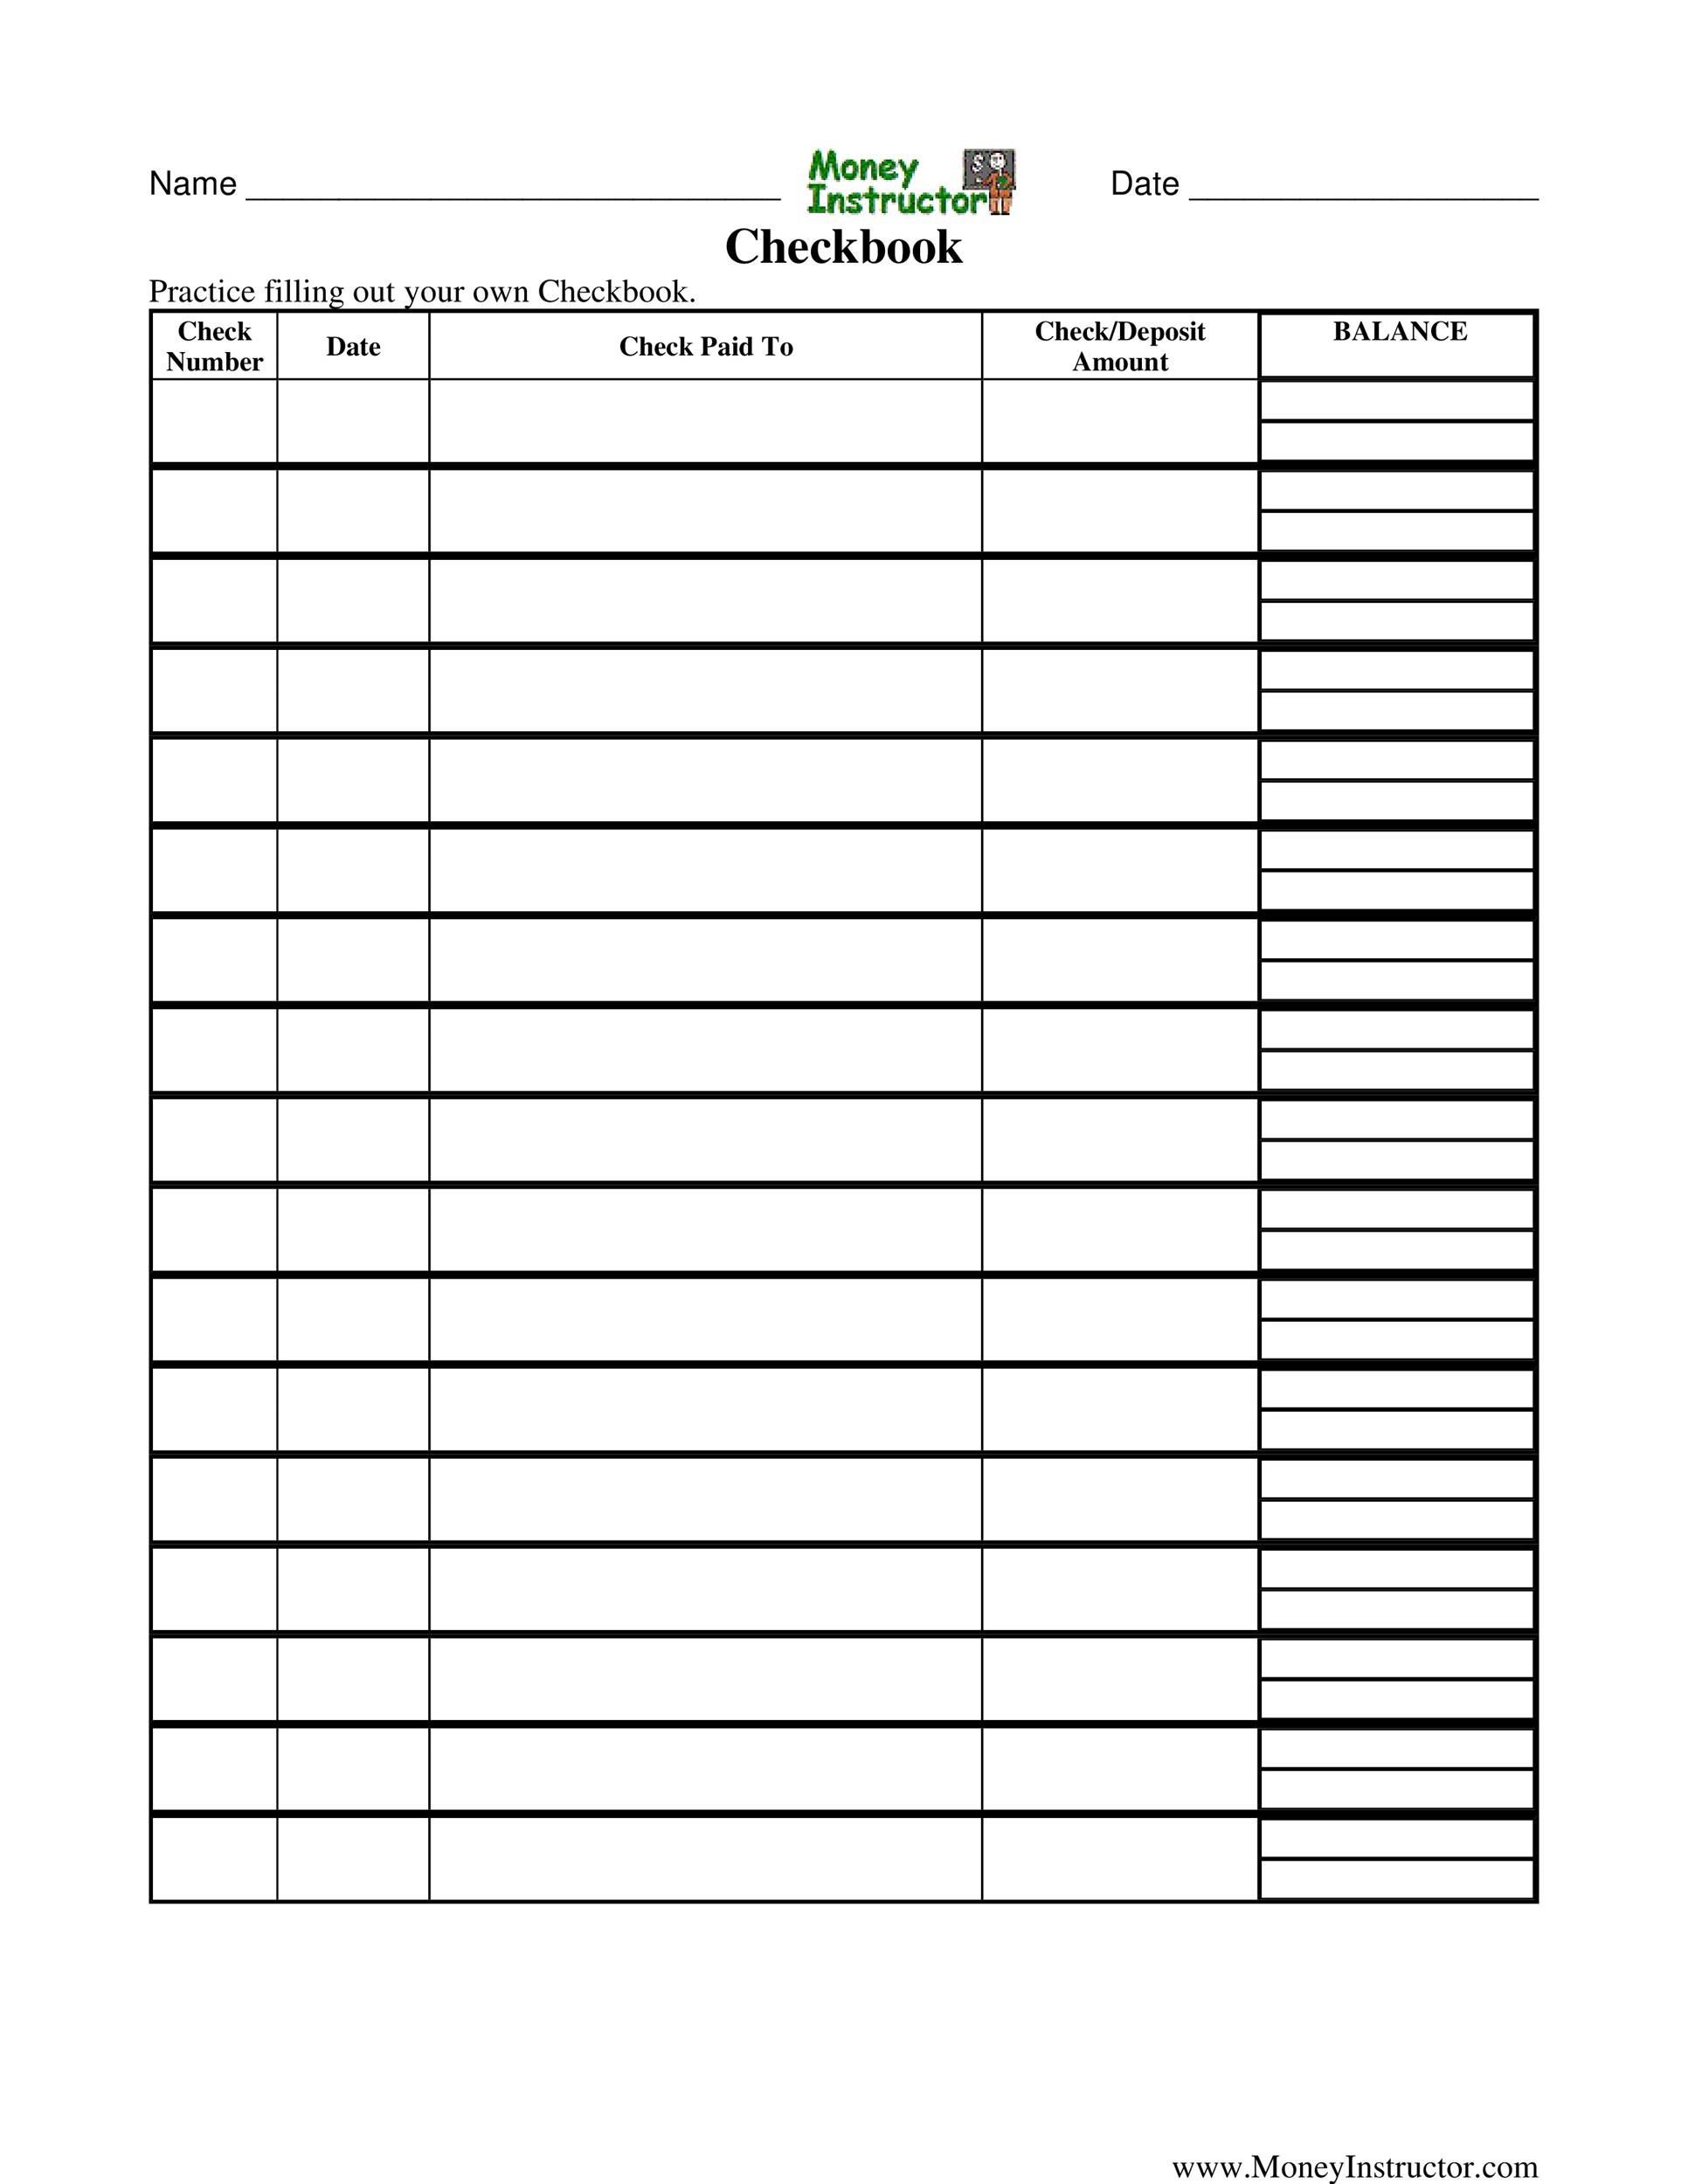 39 Checkbook Register Templates 100% Free Printable ᐅ TemplateLab